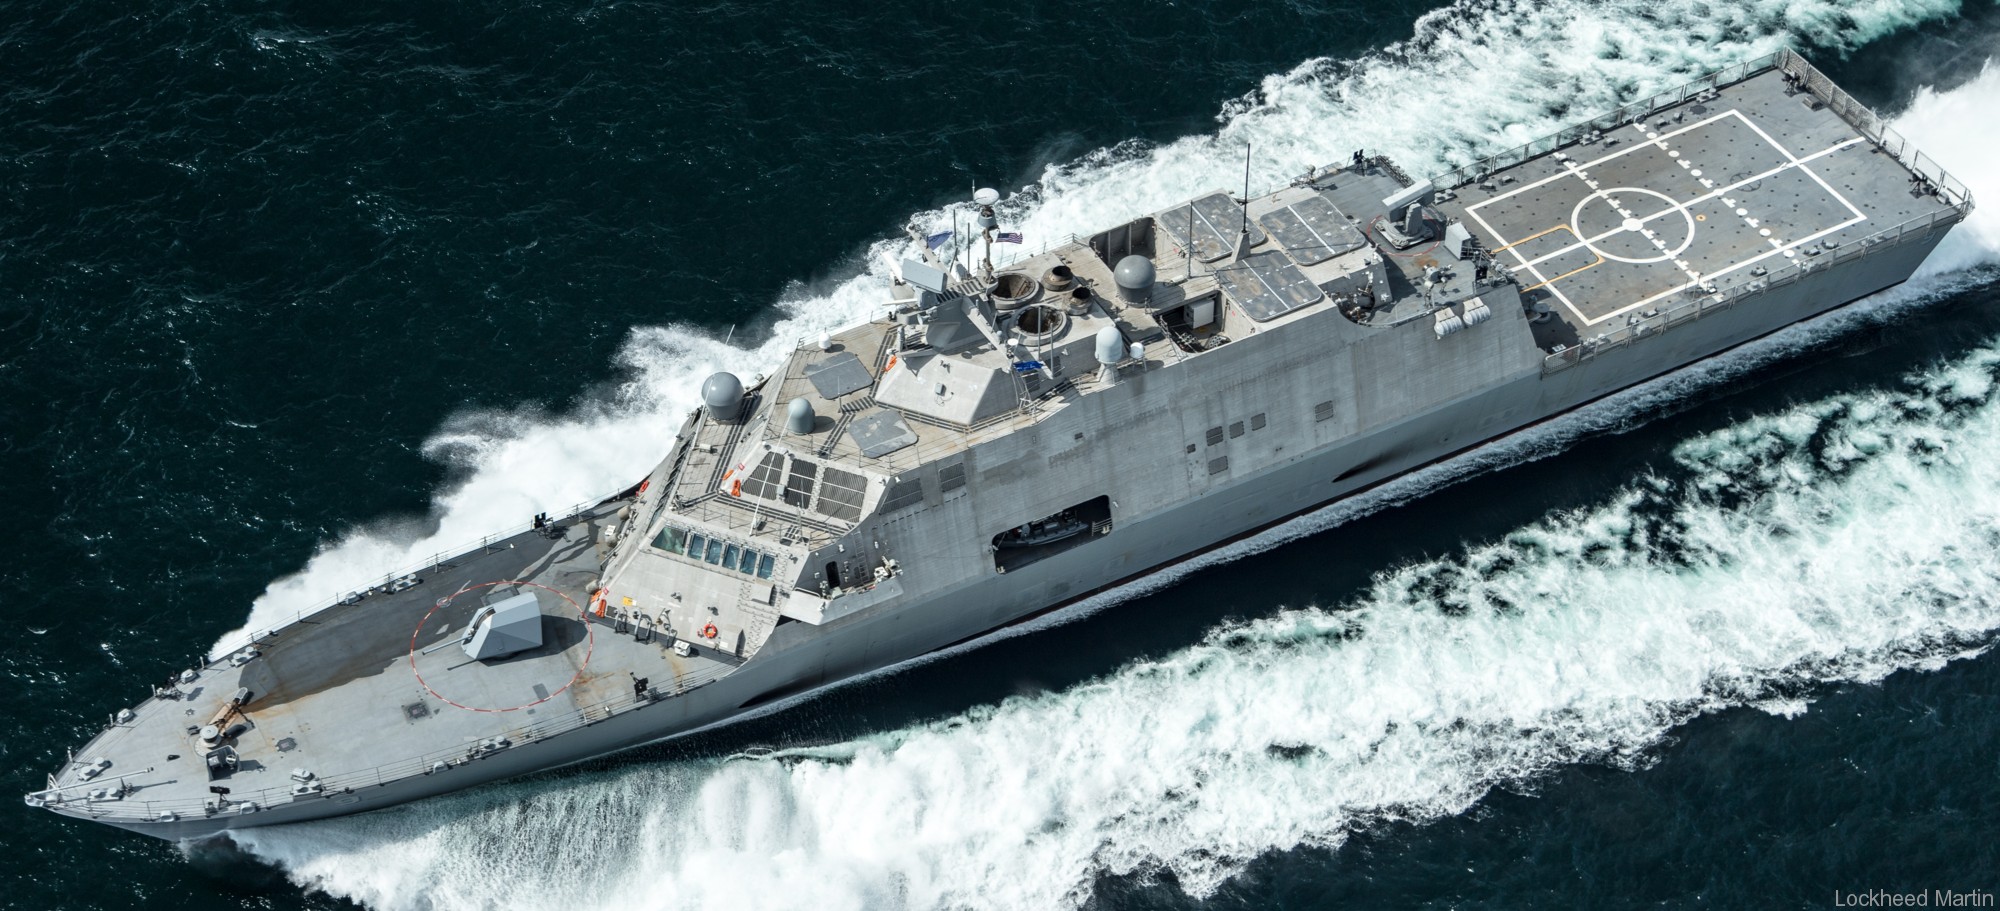 lcs-9 uss little rock freedom class littoral combat ship us navy 21